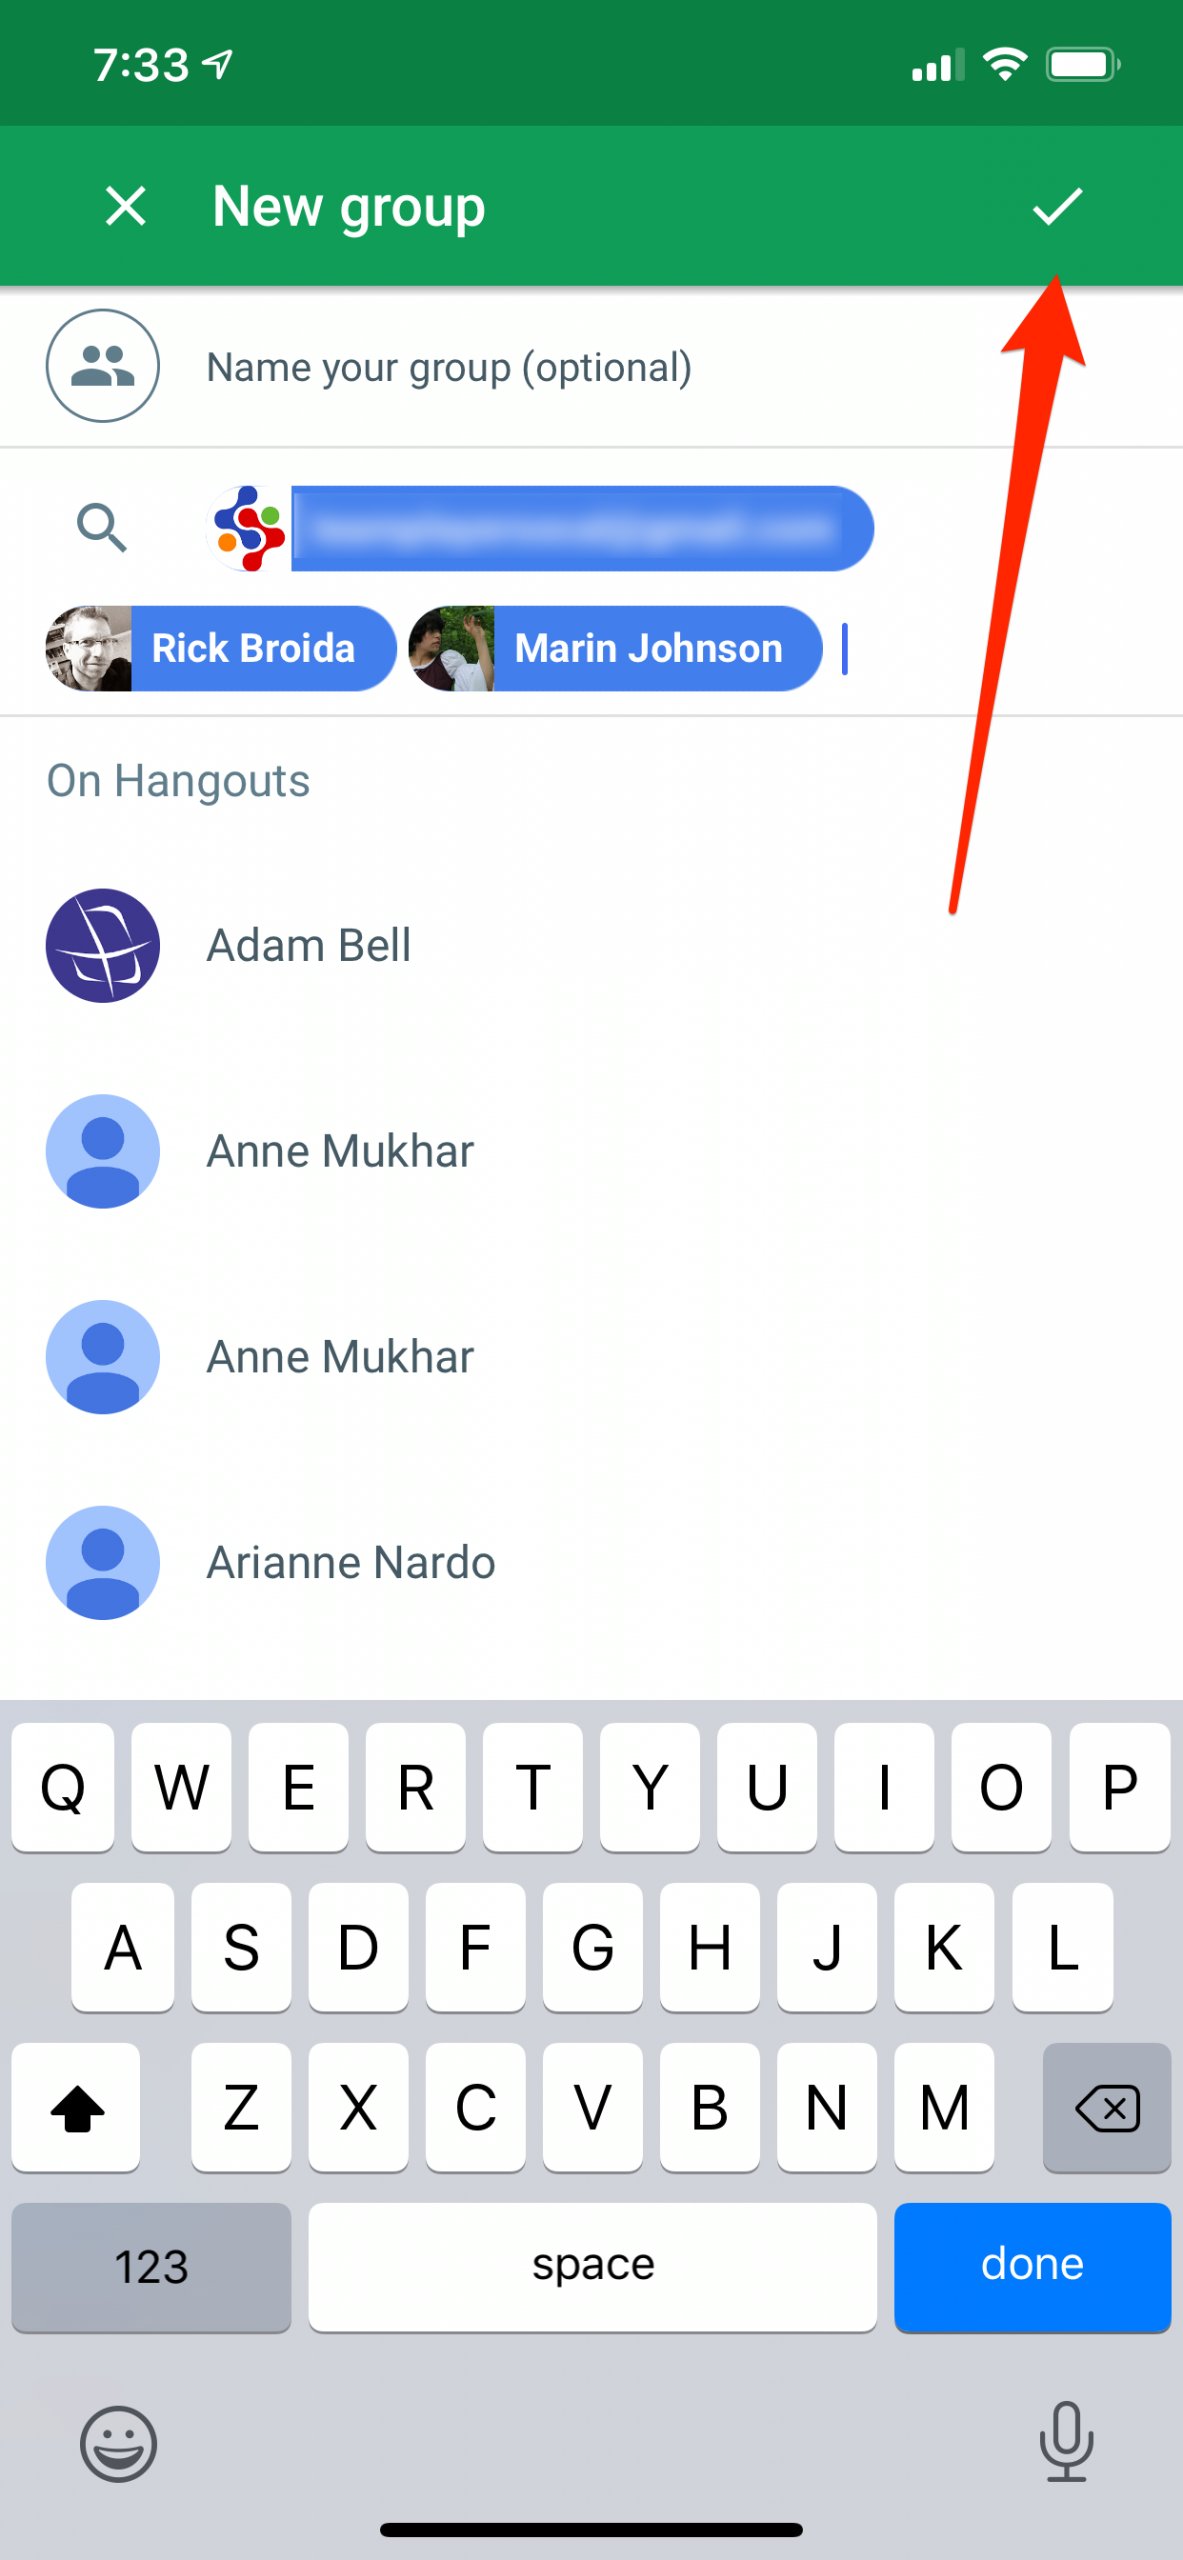 google hangouts iphone